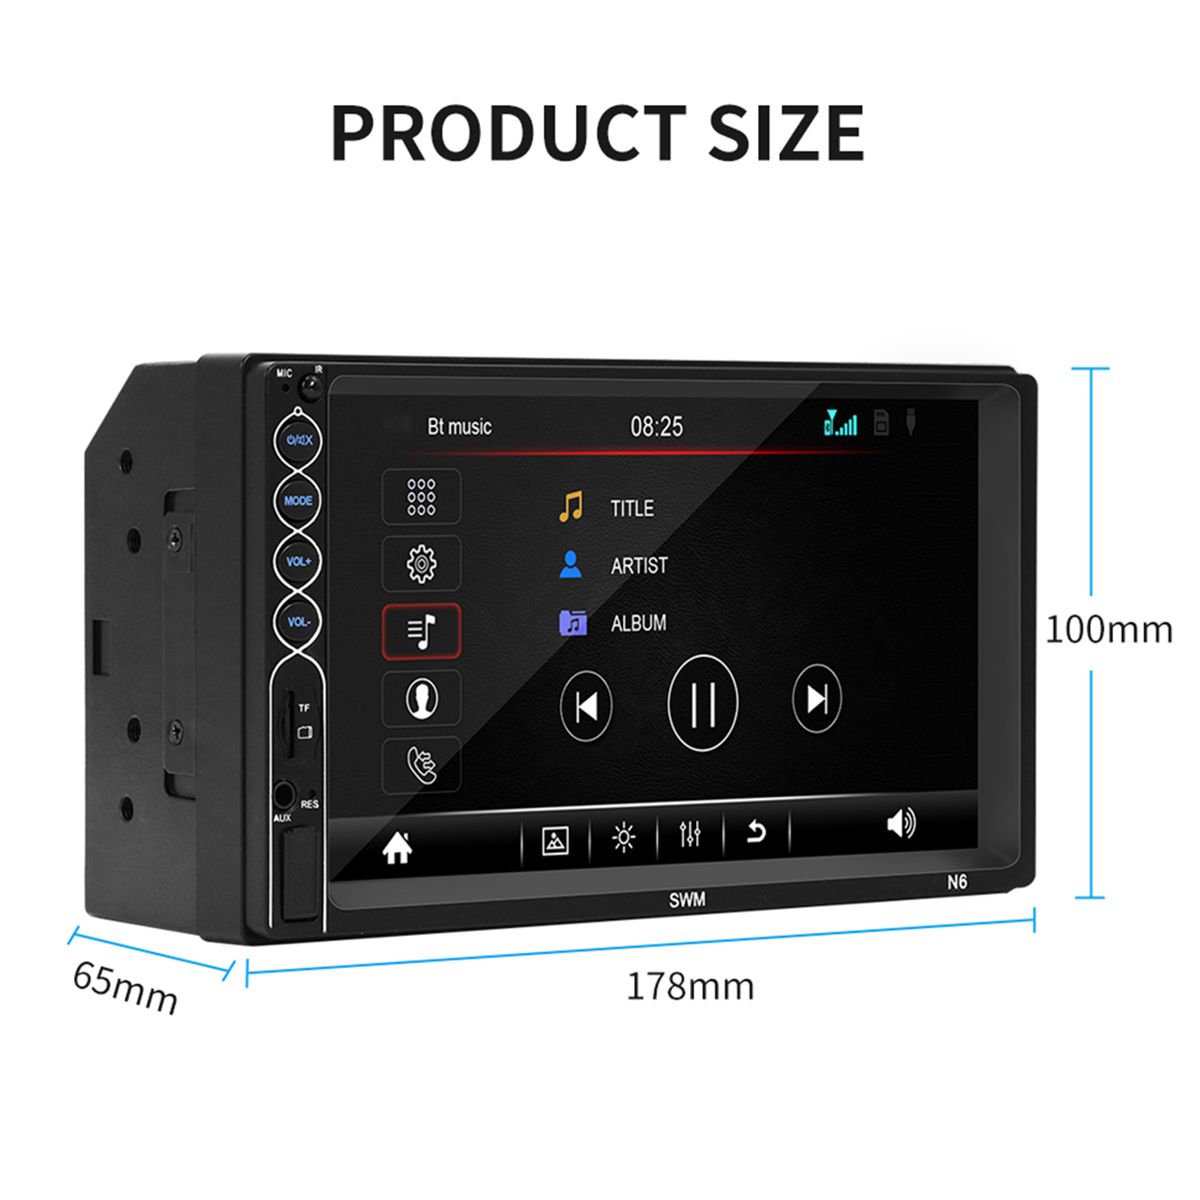 N6-7-Inch-2-Din-Wince-Car-Radio-Stereo-MP5-Player-116G-bluetooth-GPS-Touch-Screen-HD-NAV-FM-AUX-USB--1598805